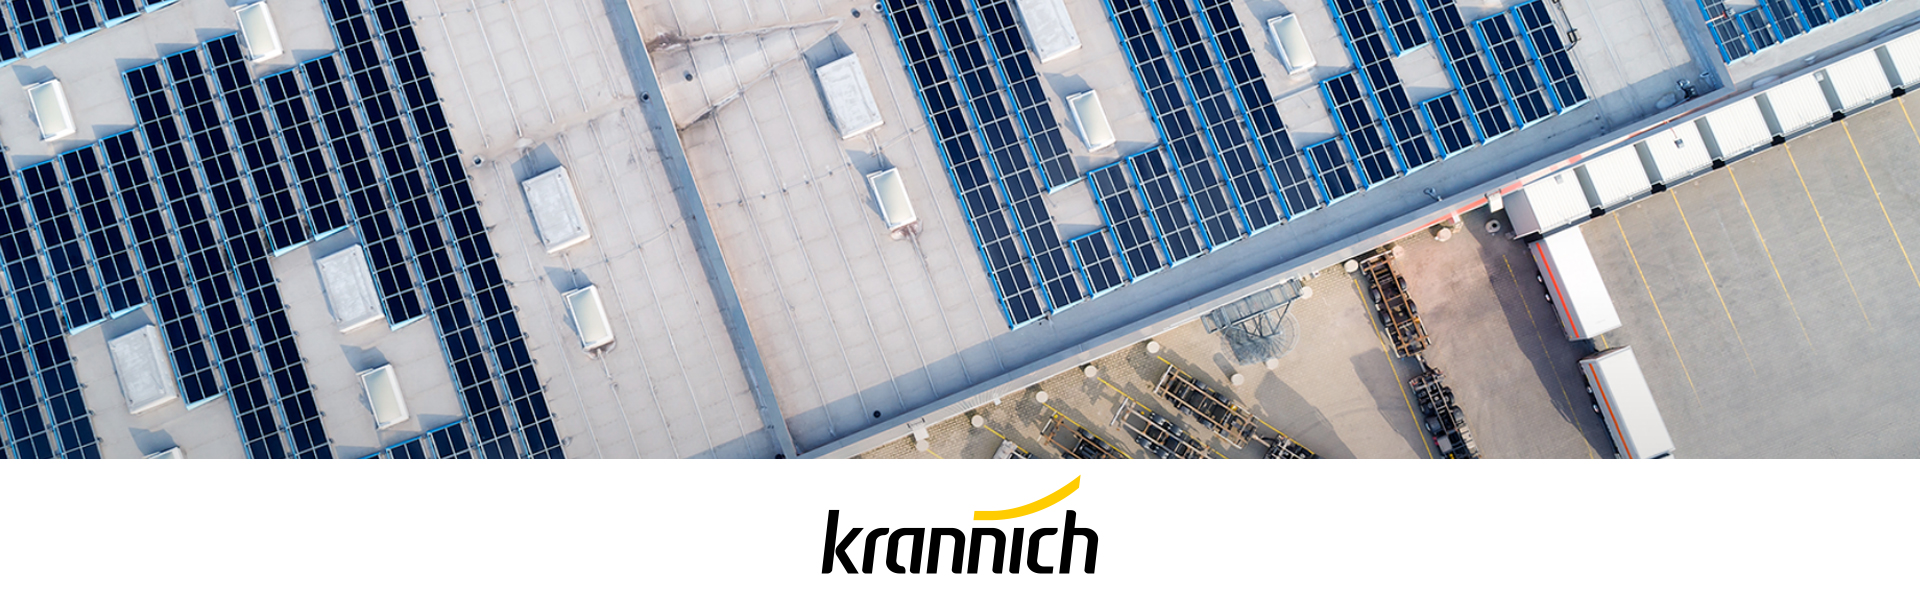 B2B E Business Krannich Solar